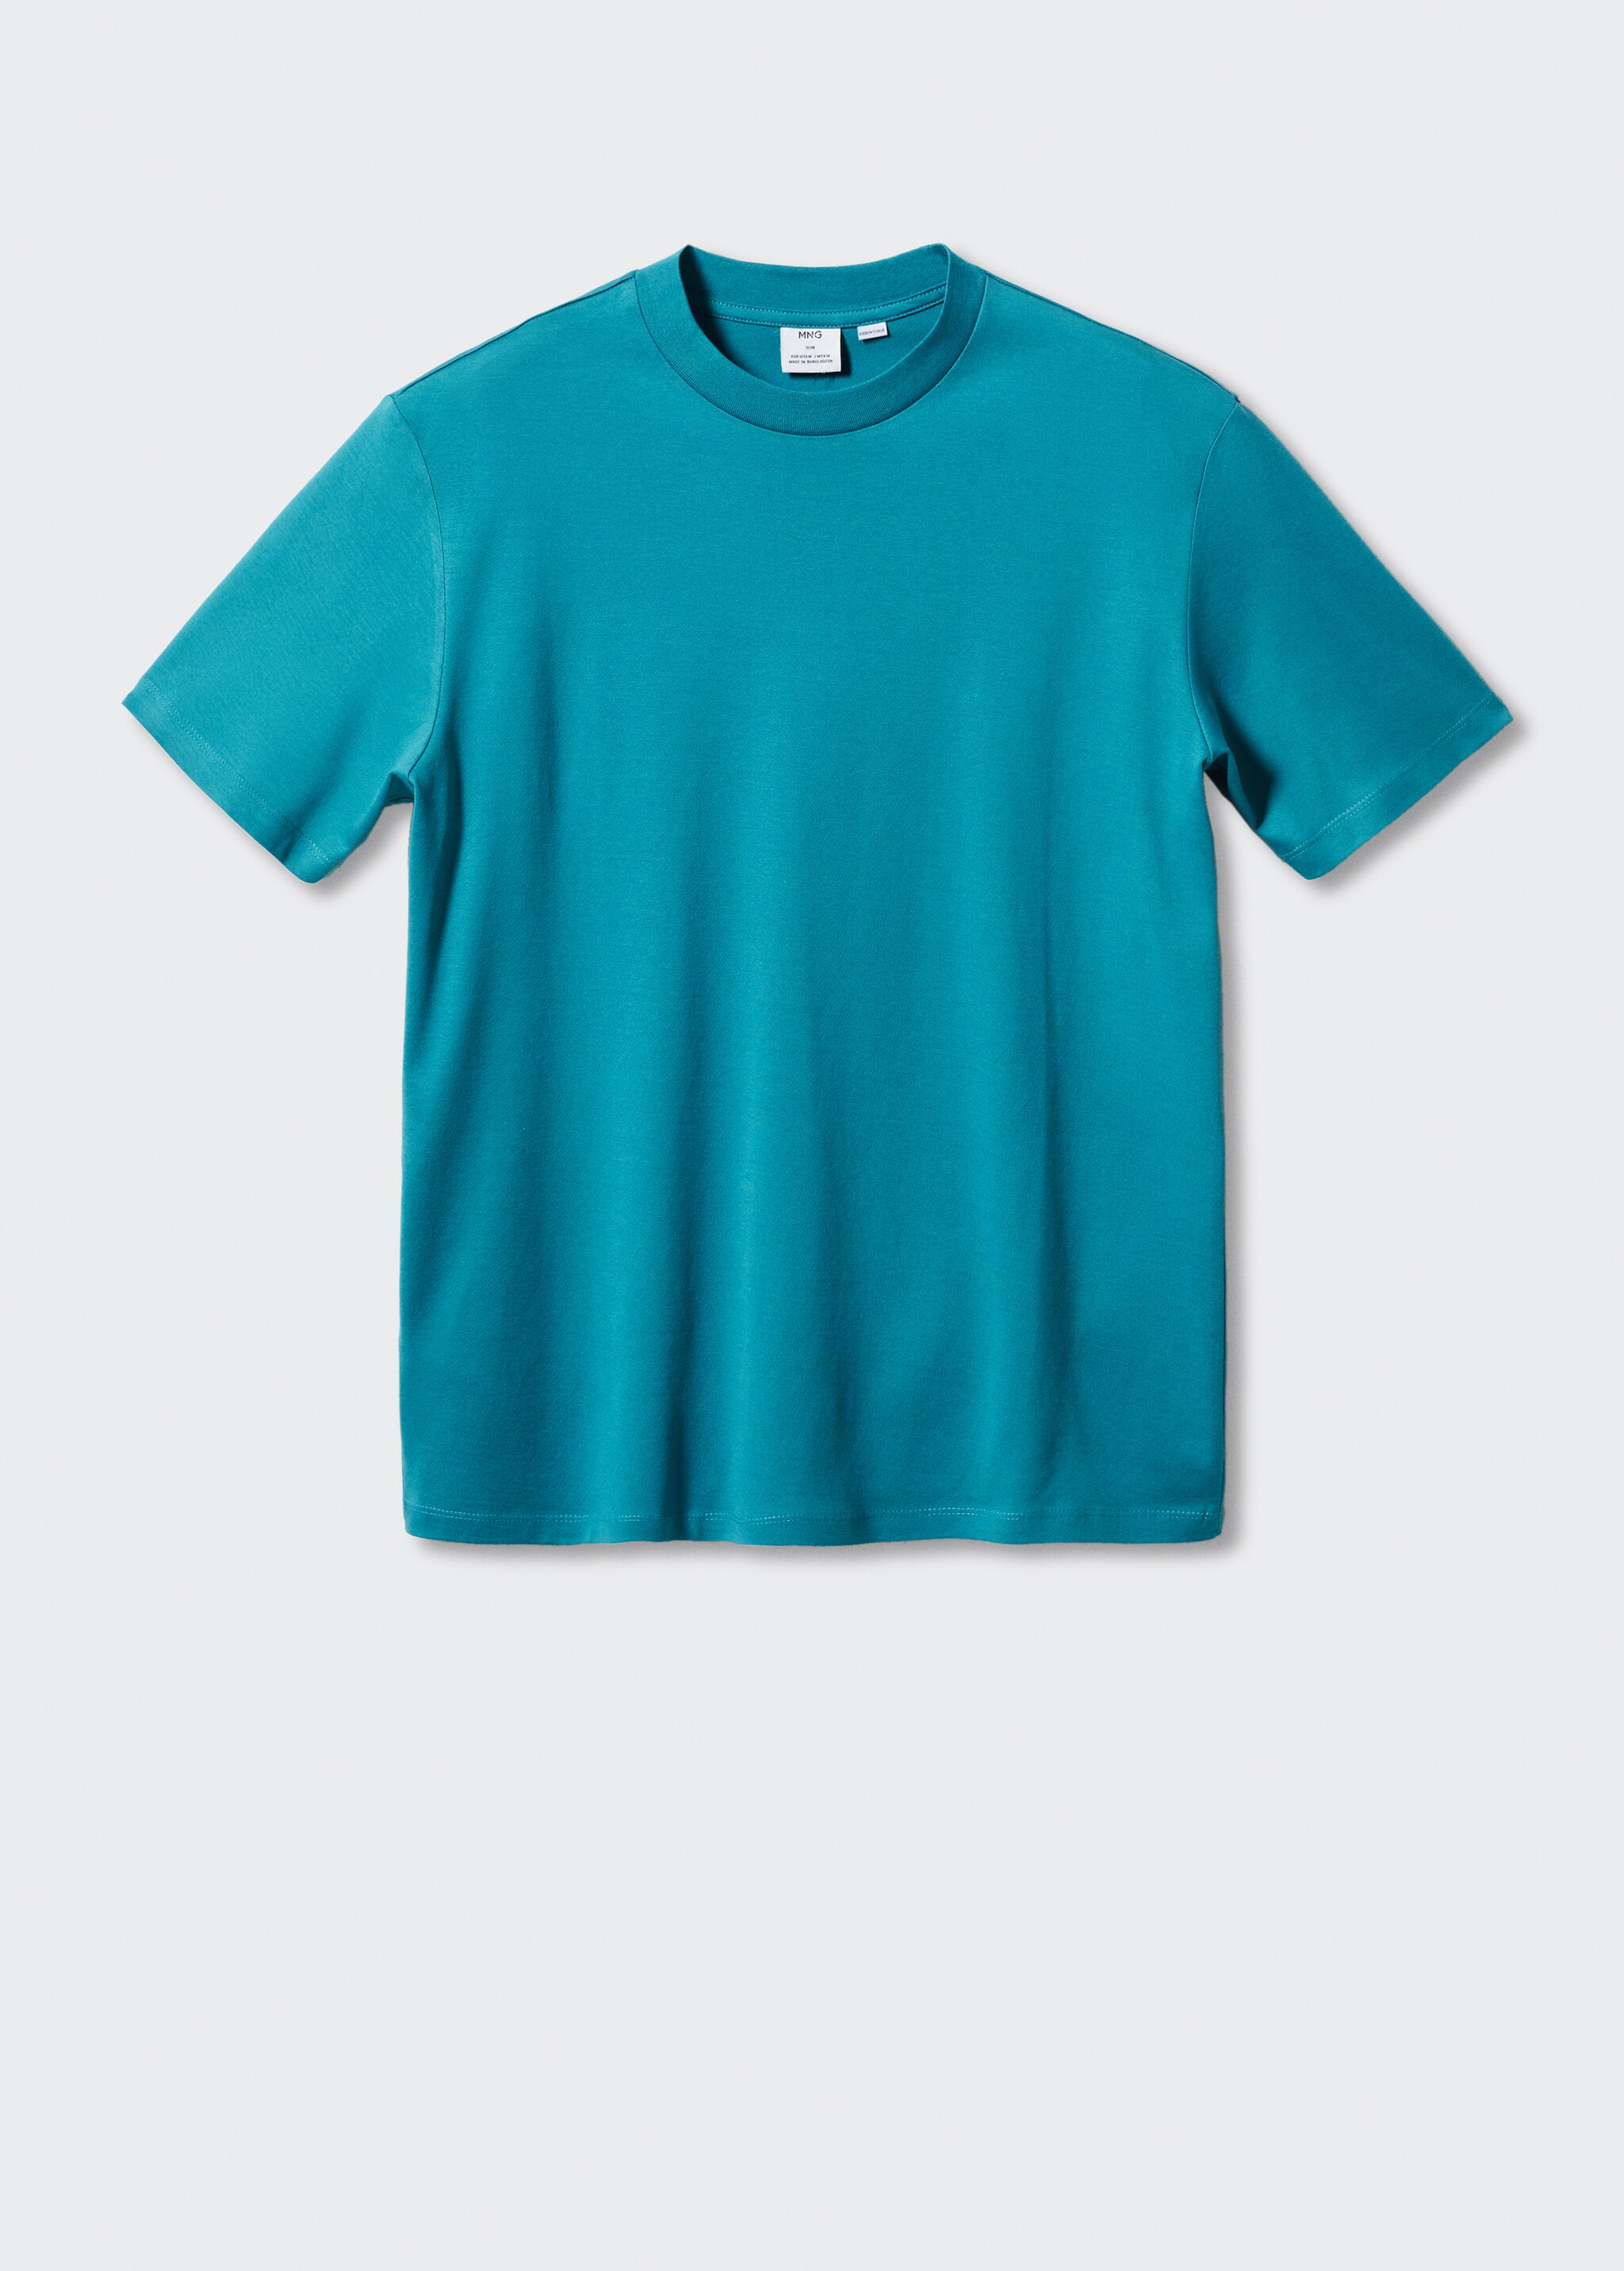 Camiseta básica mercerizada lightweight - Artículo sin modelo